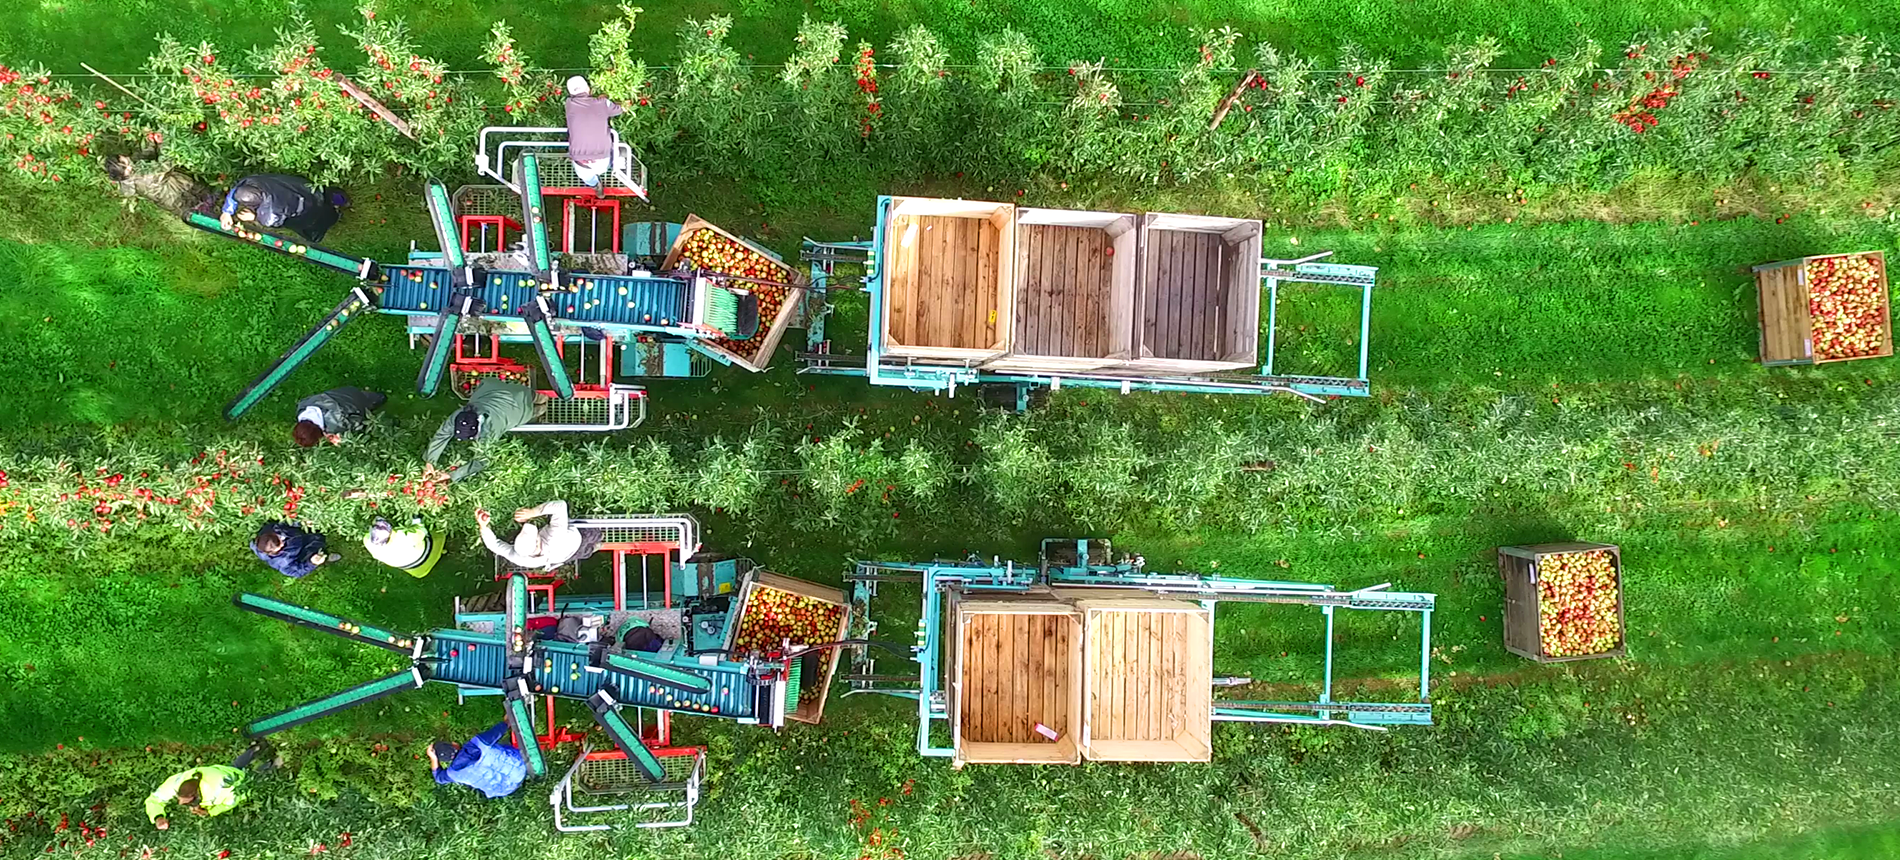 Tecnofruit Orchard Harvesting Machine